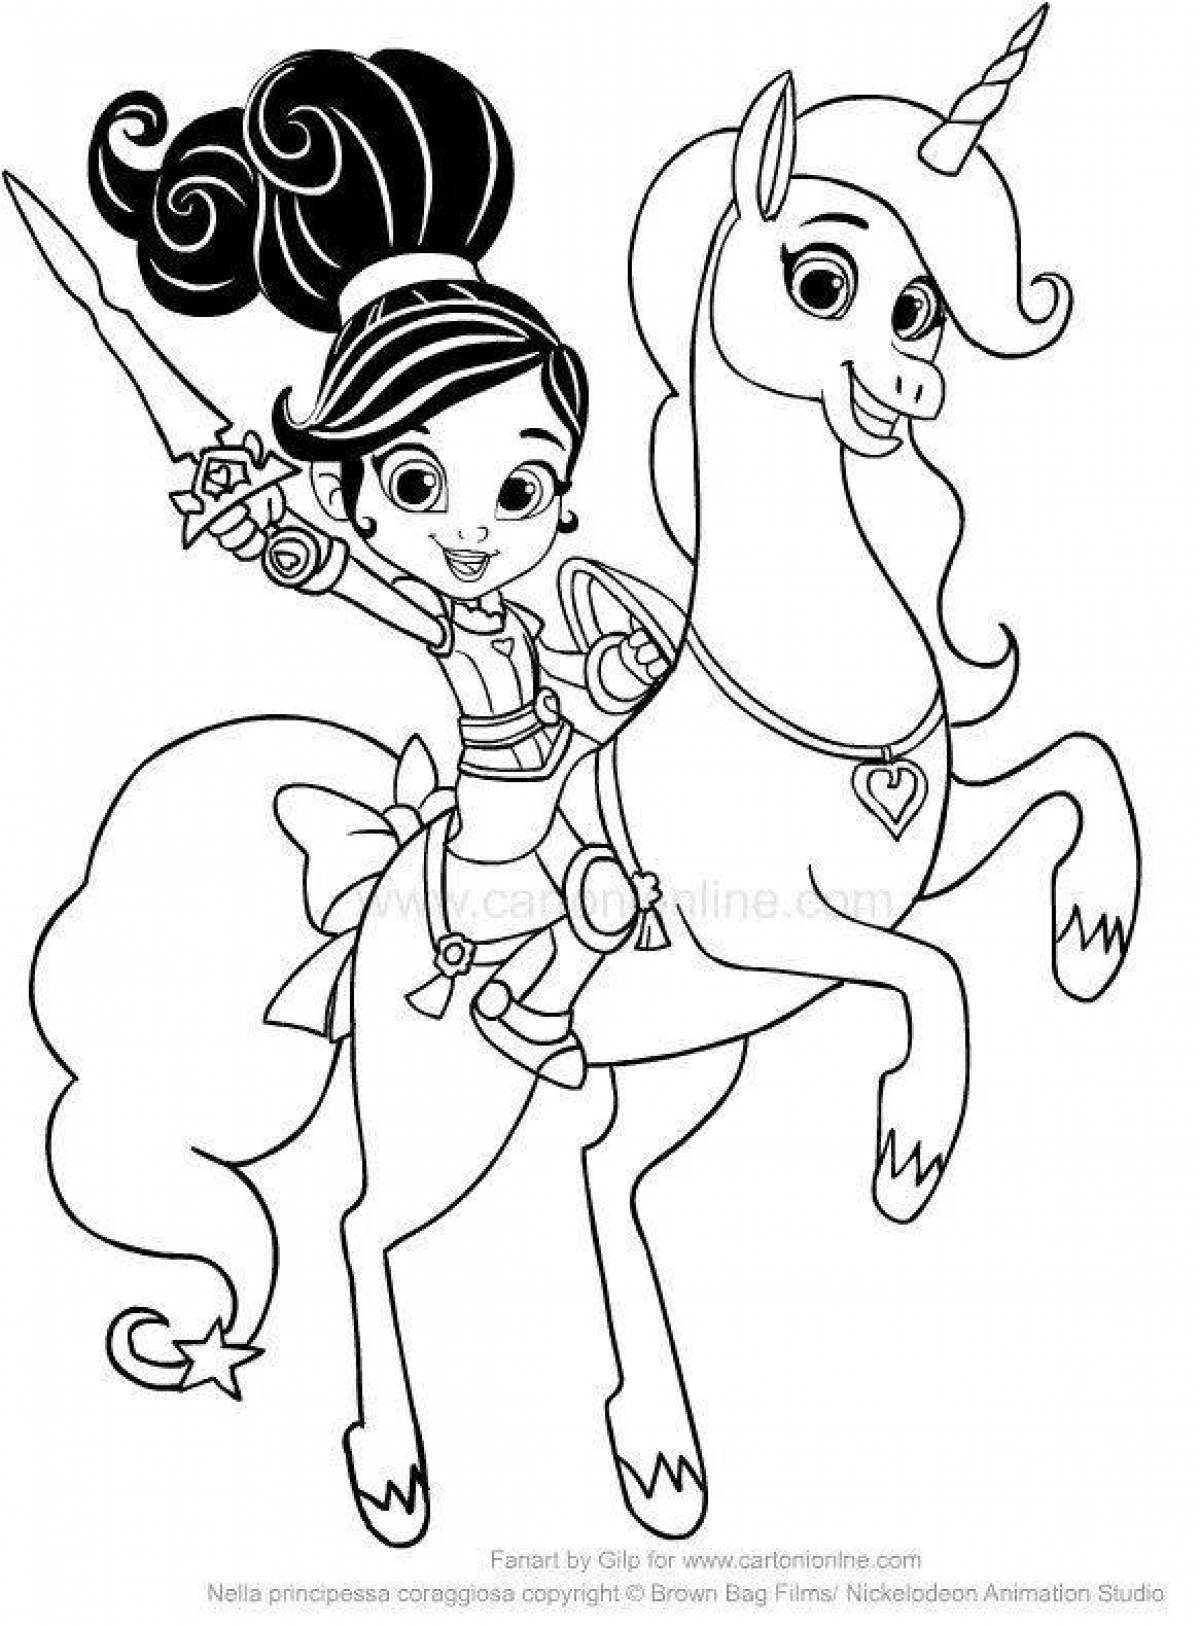 Princess unicorn coloring page